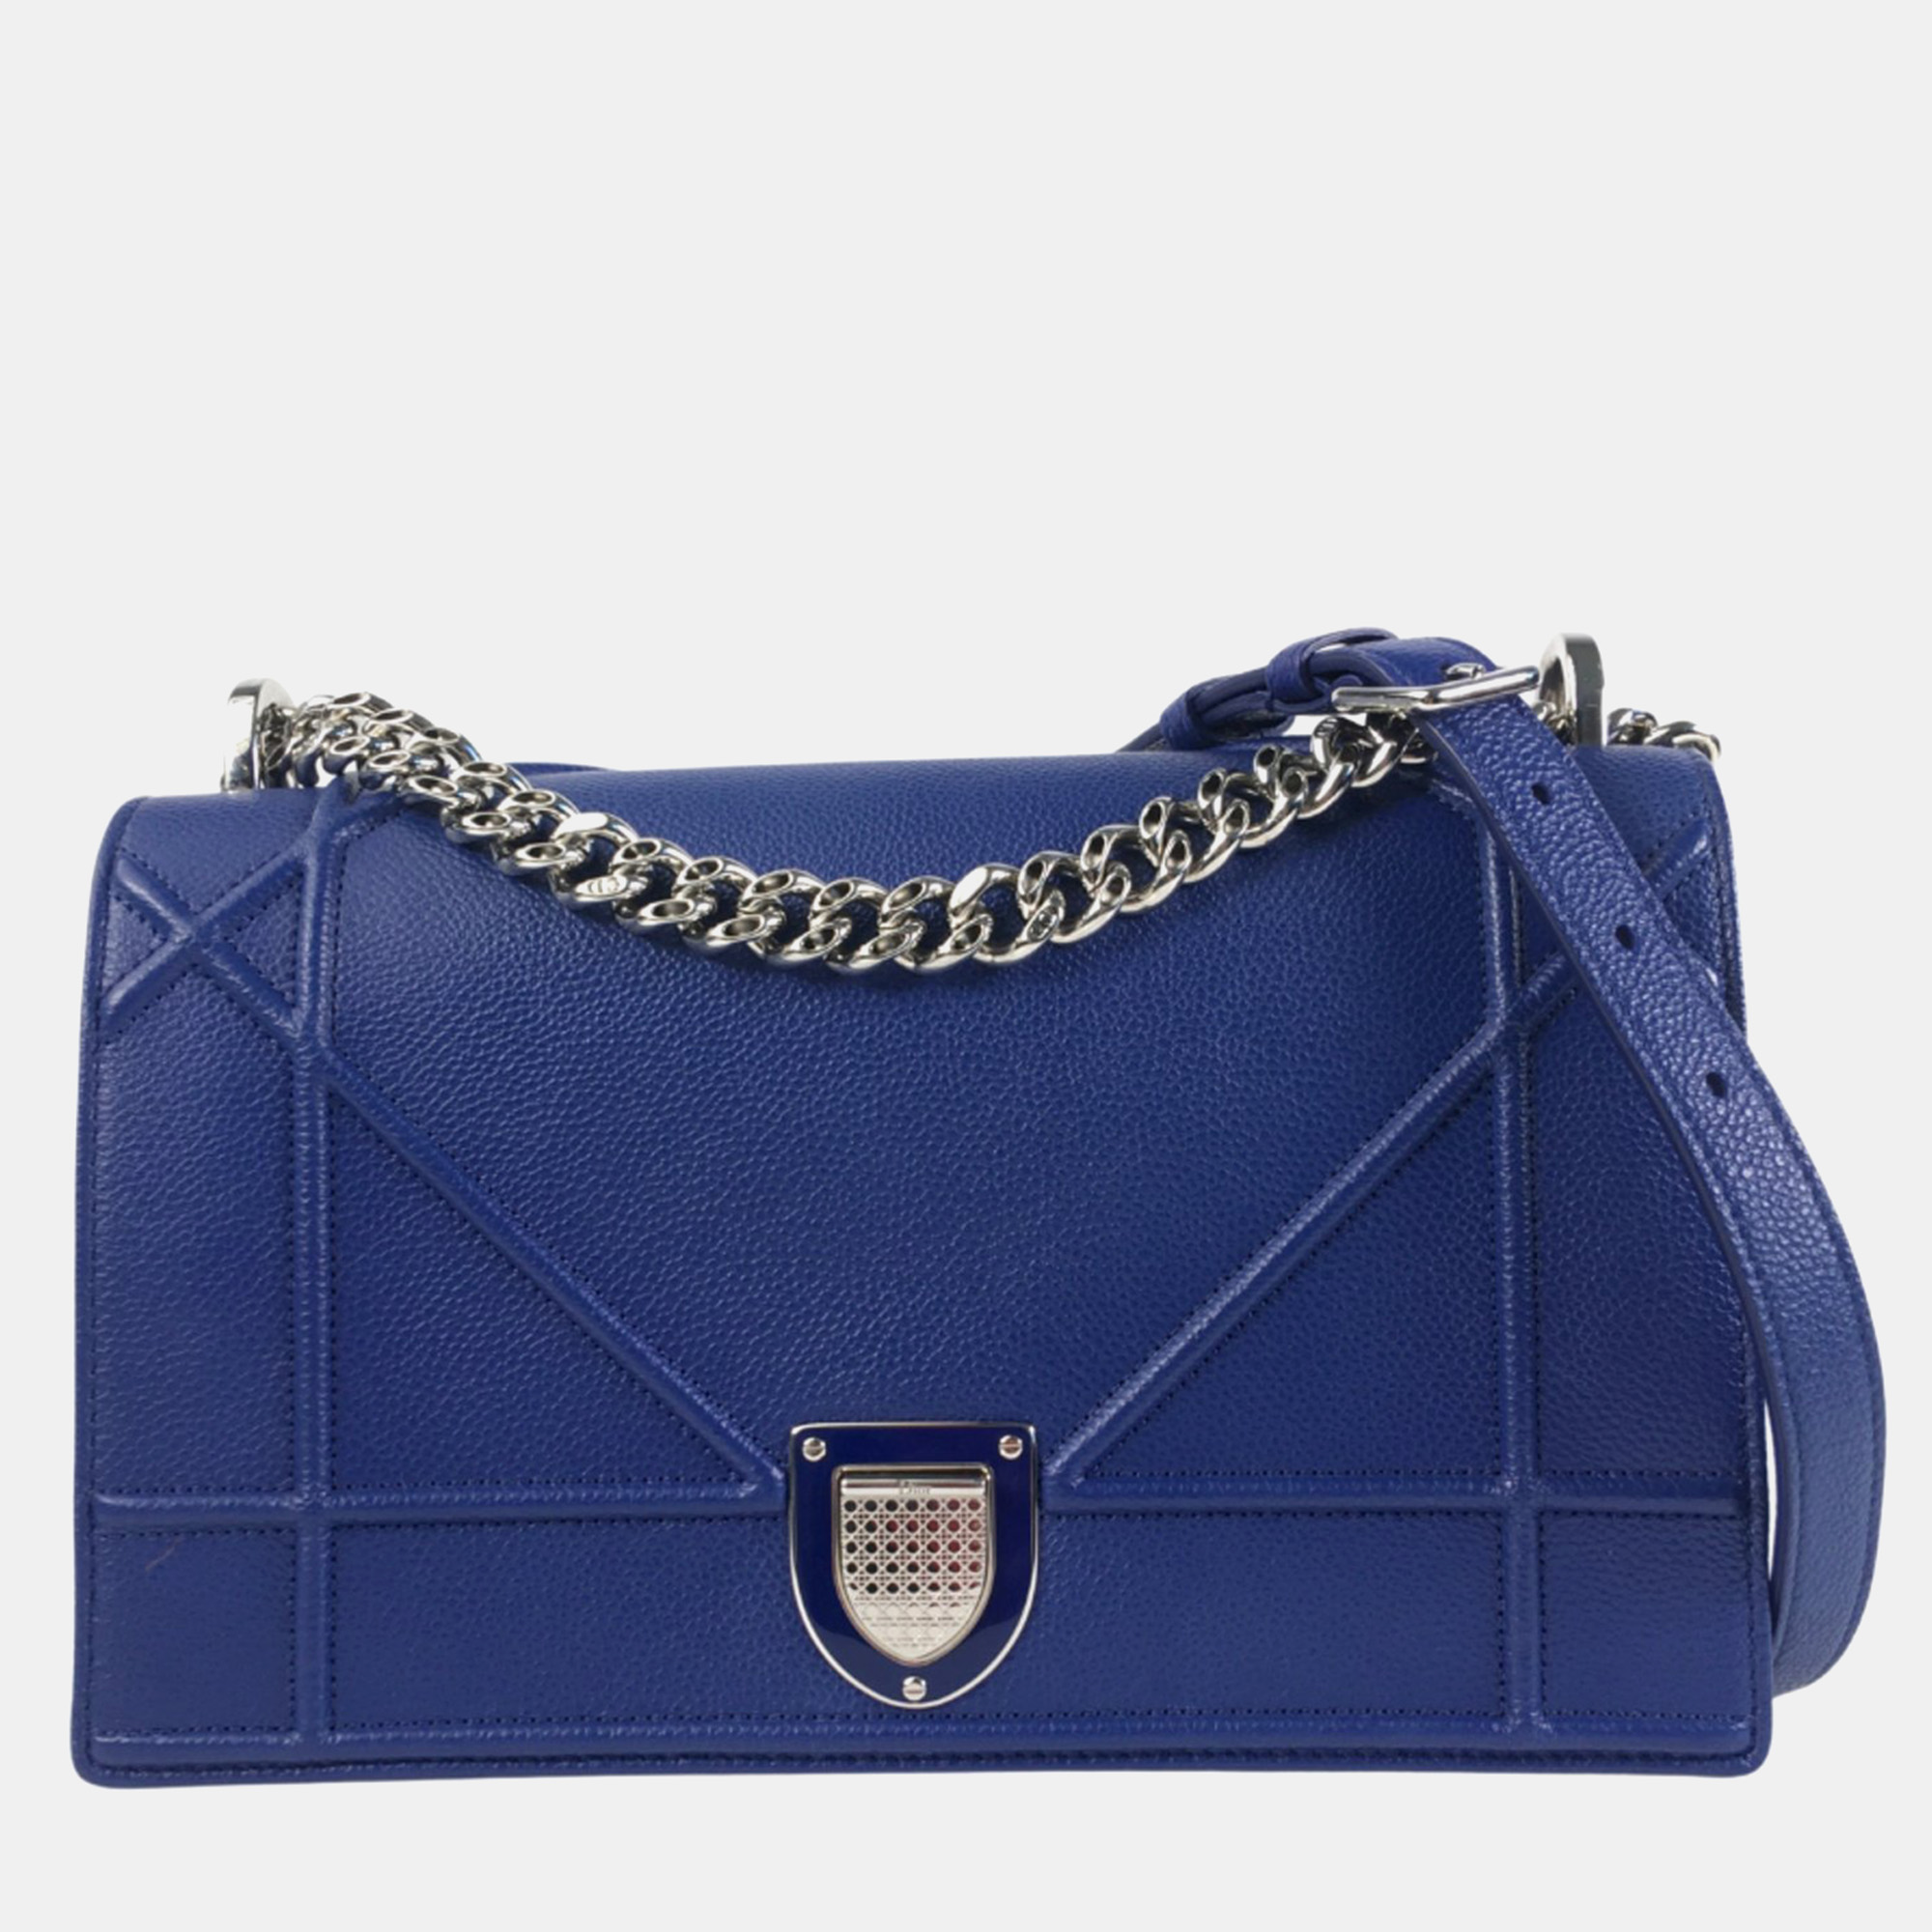 Dior blue pebbled leather medium diorama shoulder bag